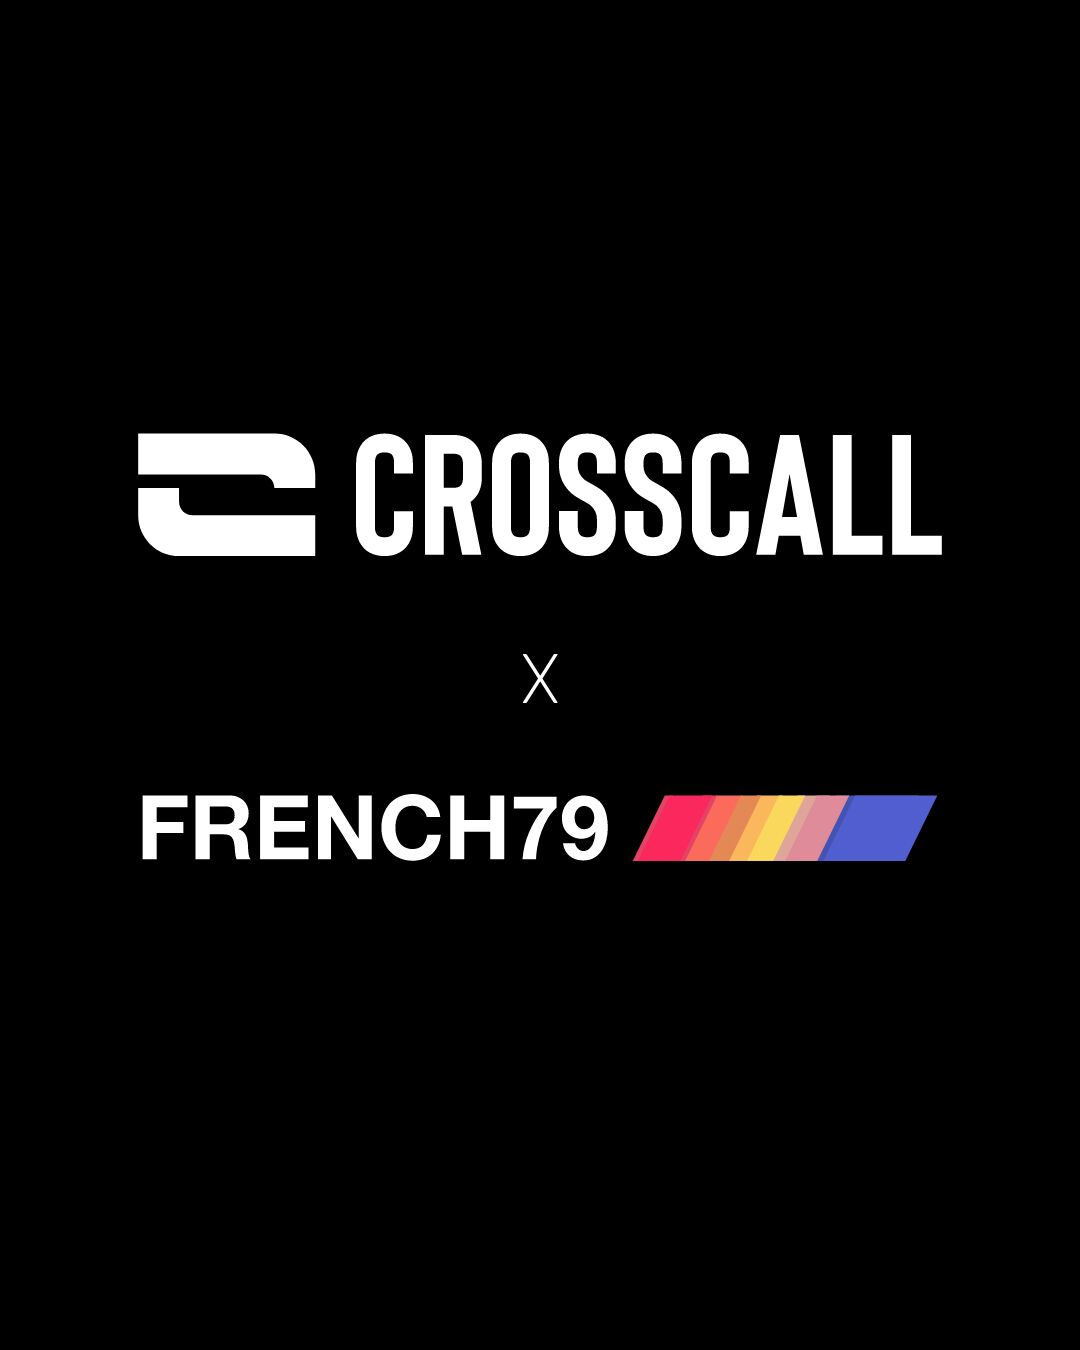 Logo French 79 x Crosscall